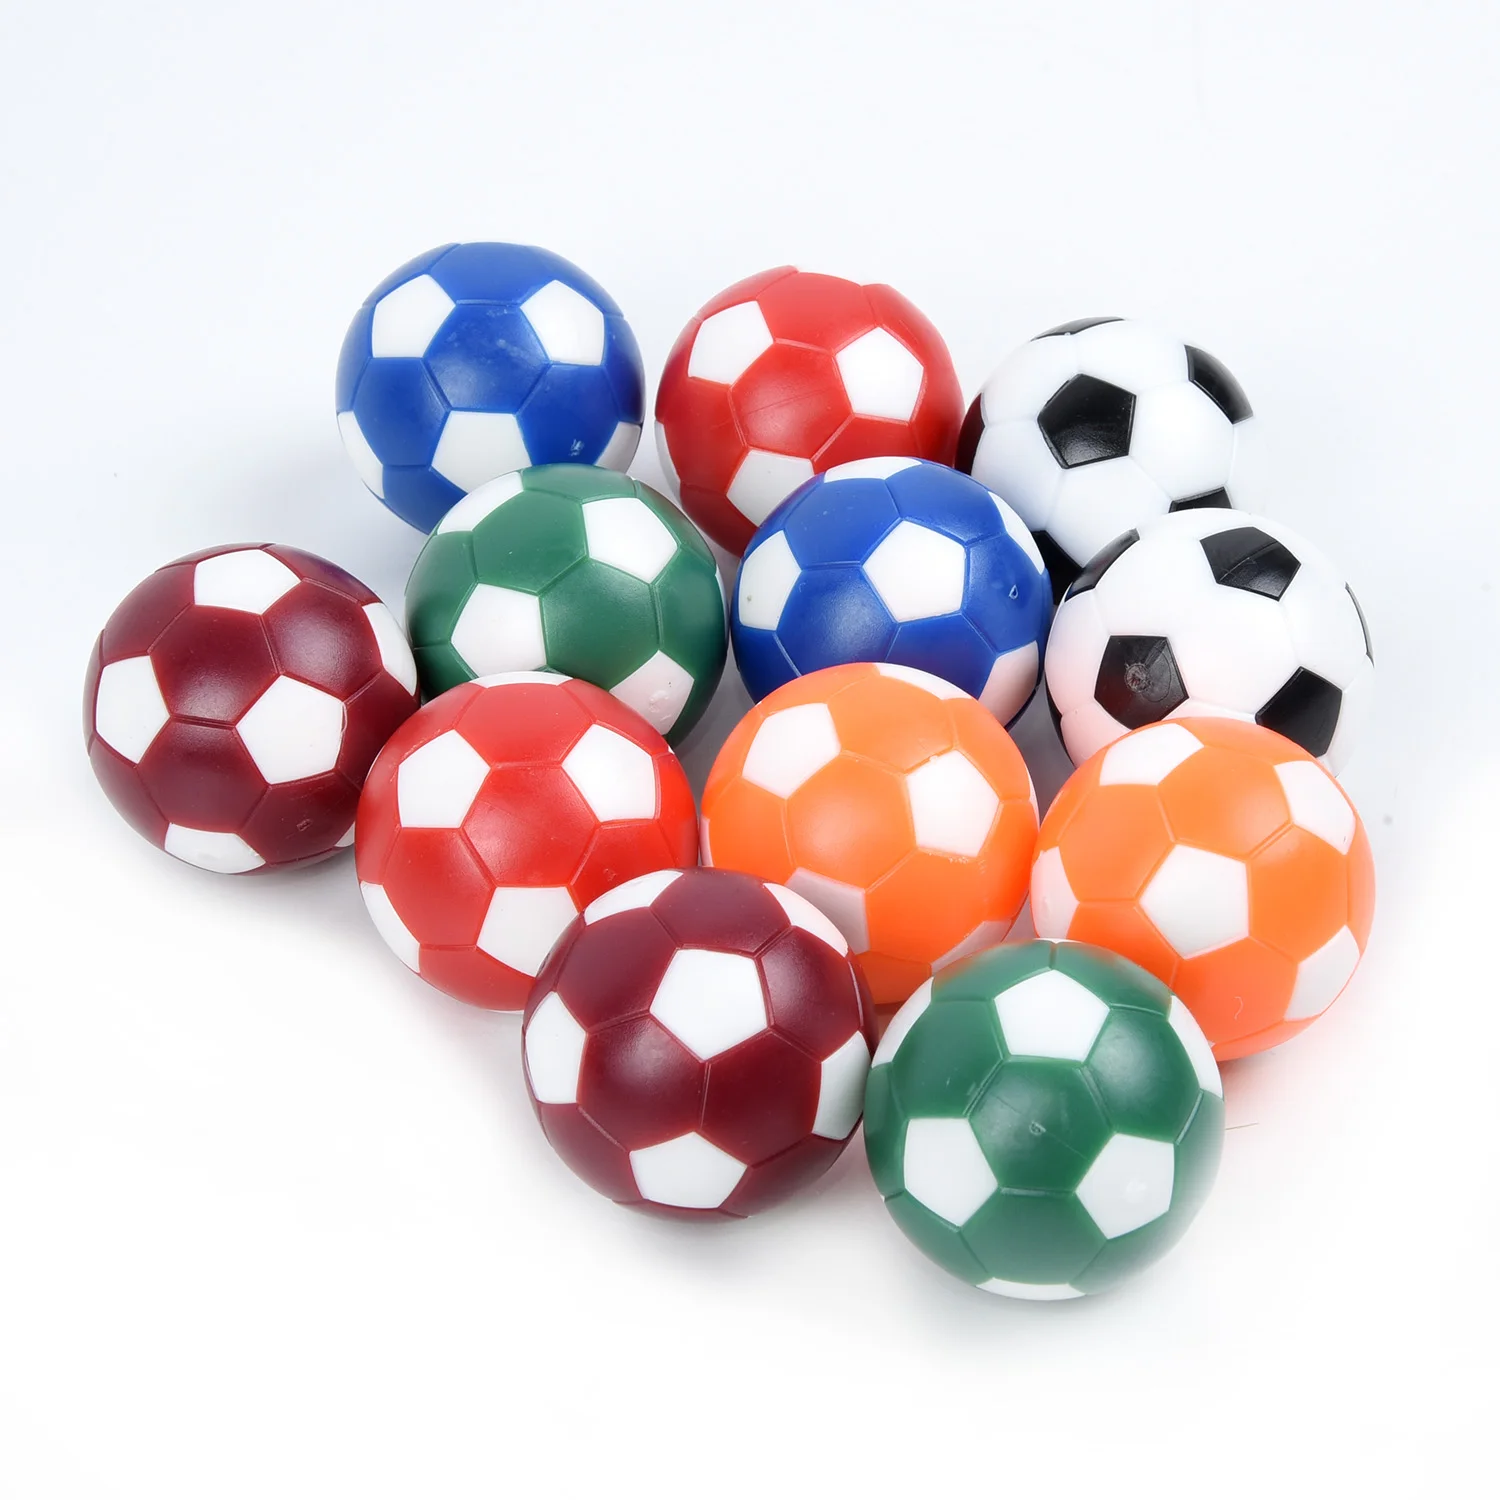 32mm Mini Soccer Table Foosball Ball Football Indoor Entertainment Game D7N3 